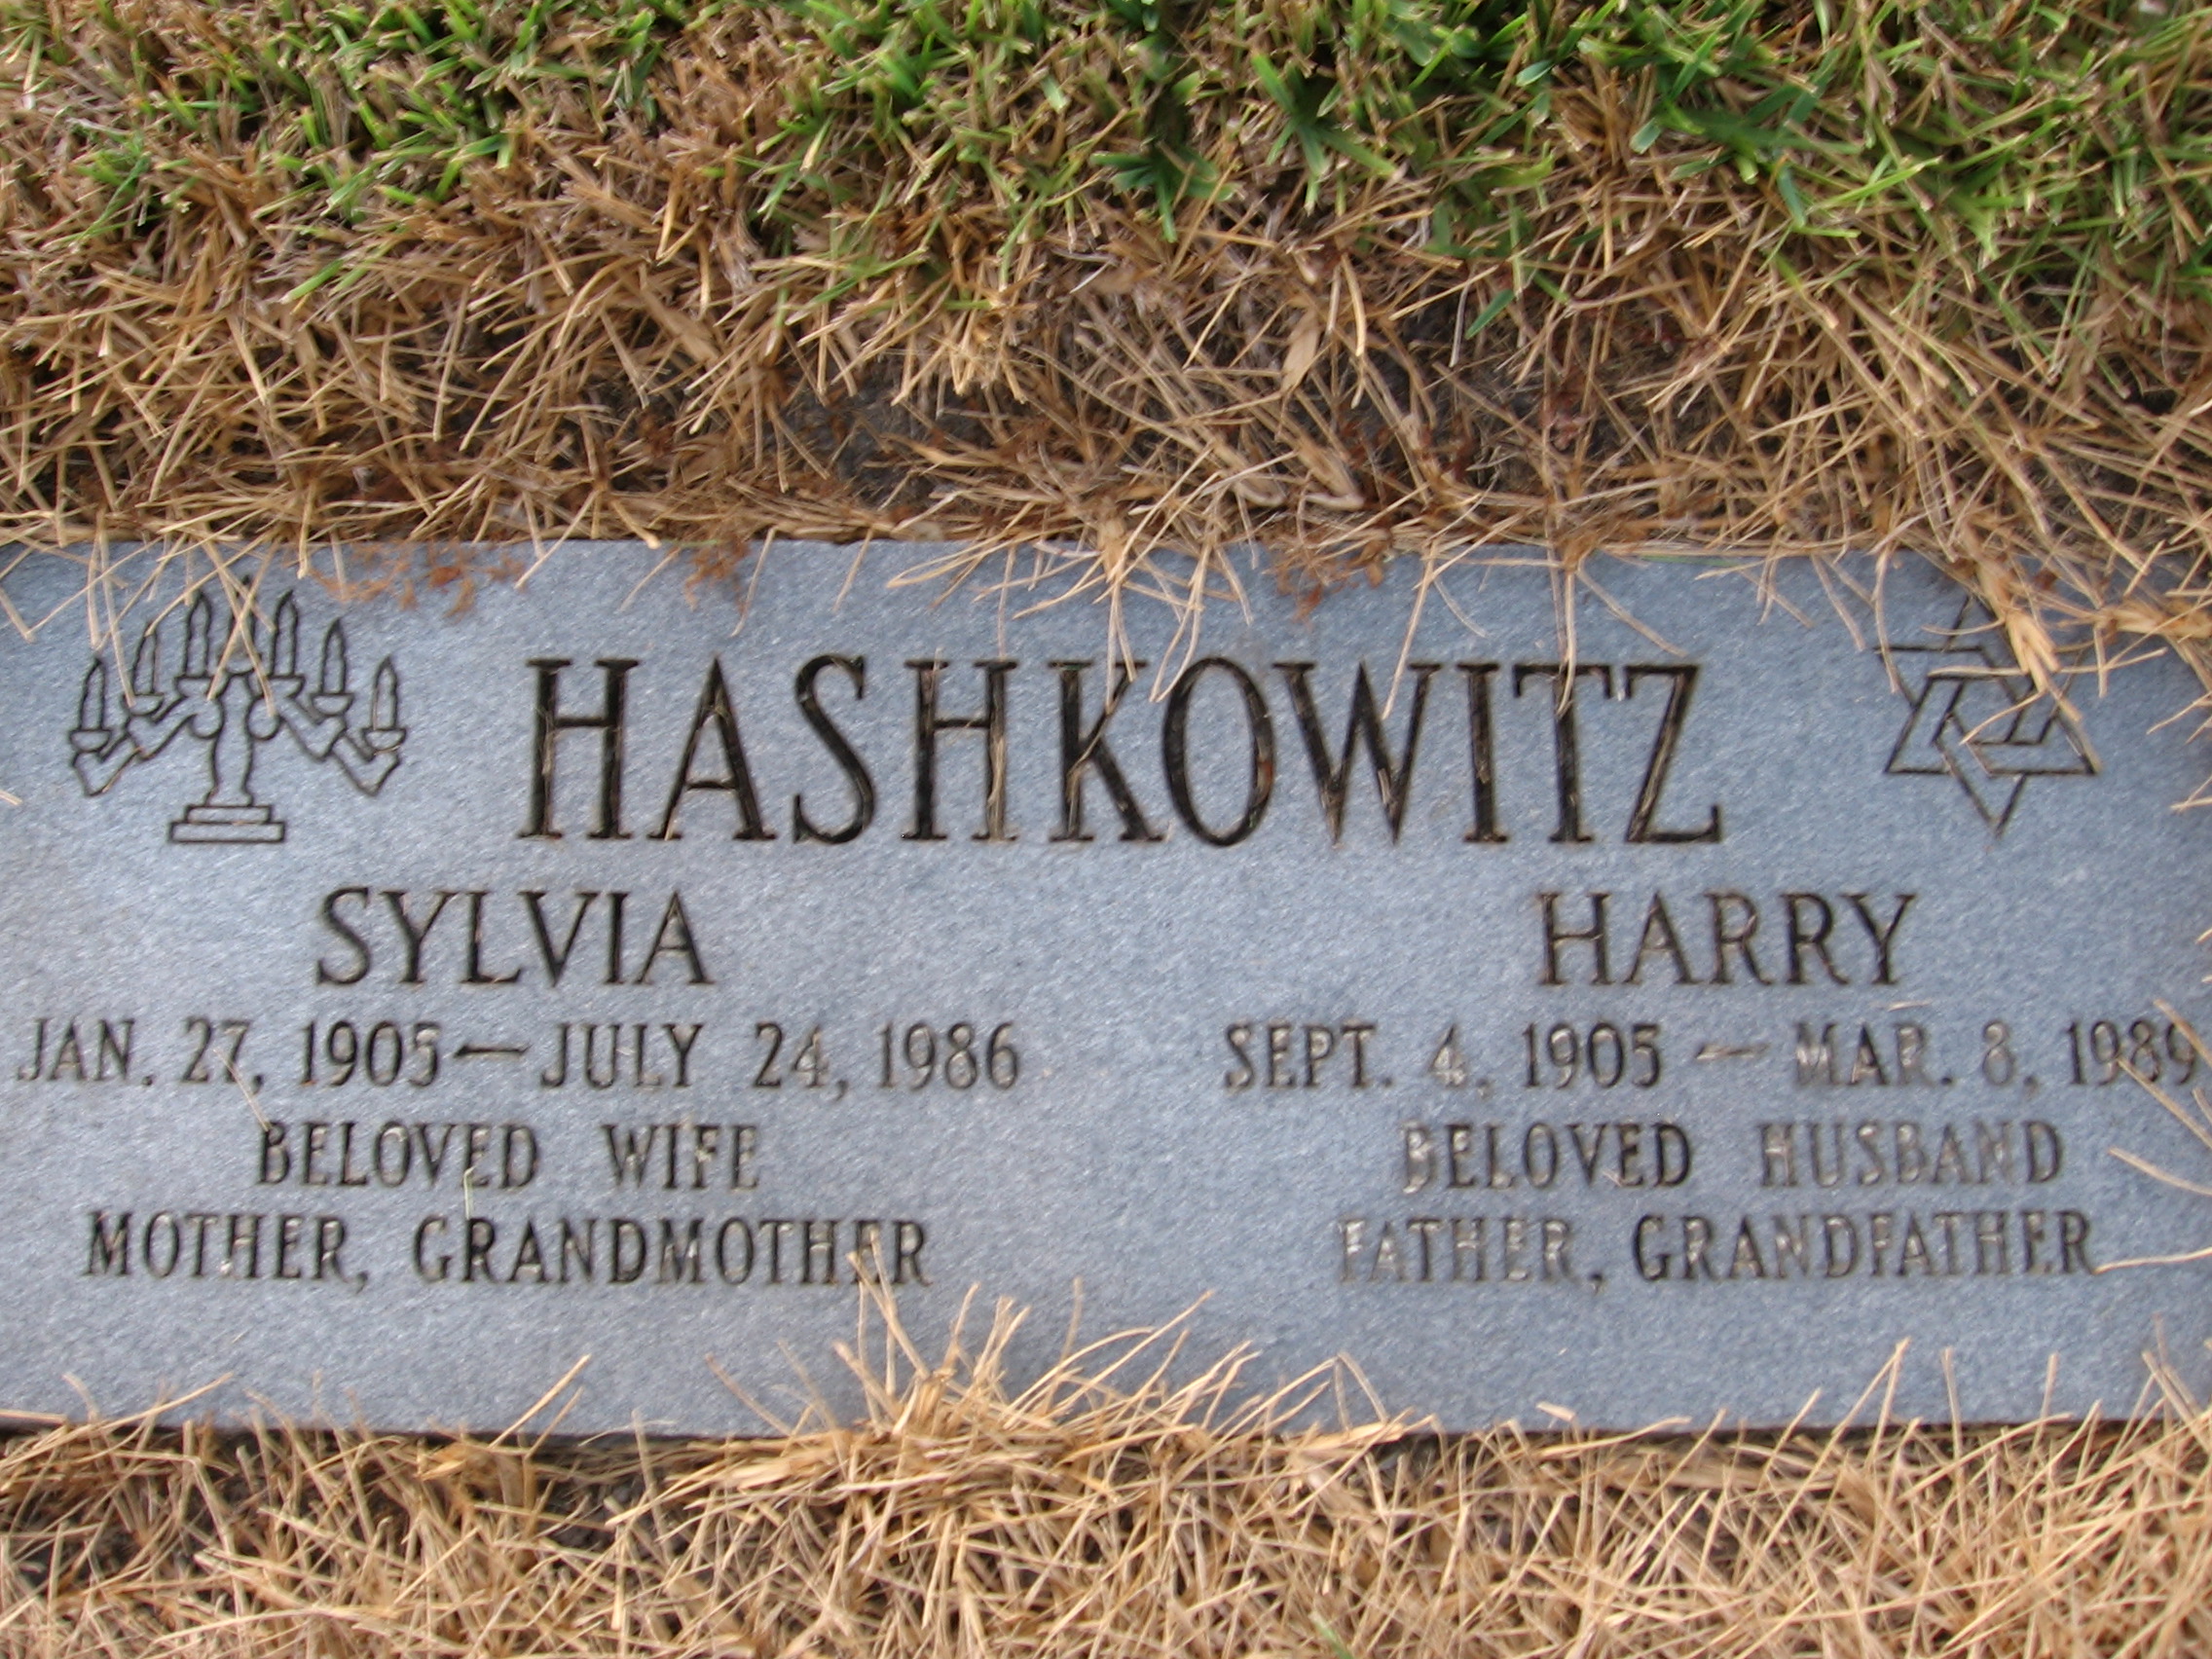 Harry Hashkowitz